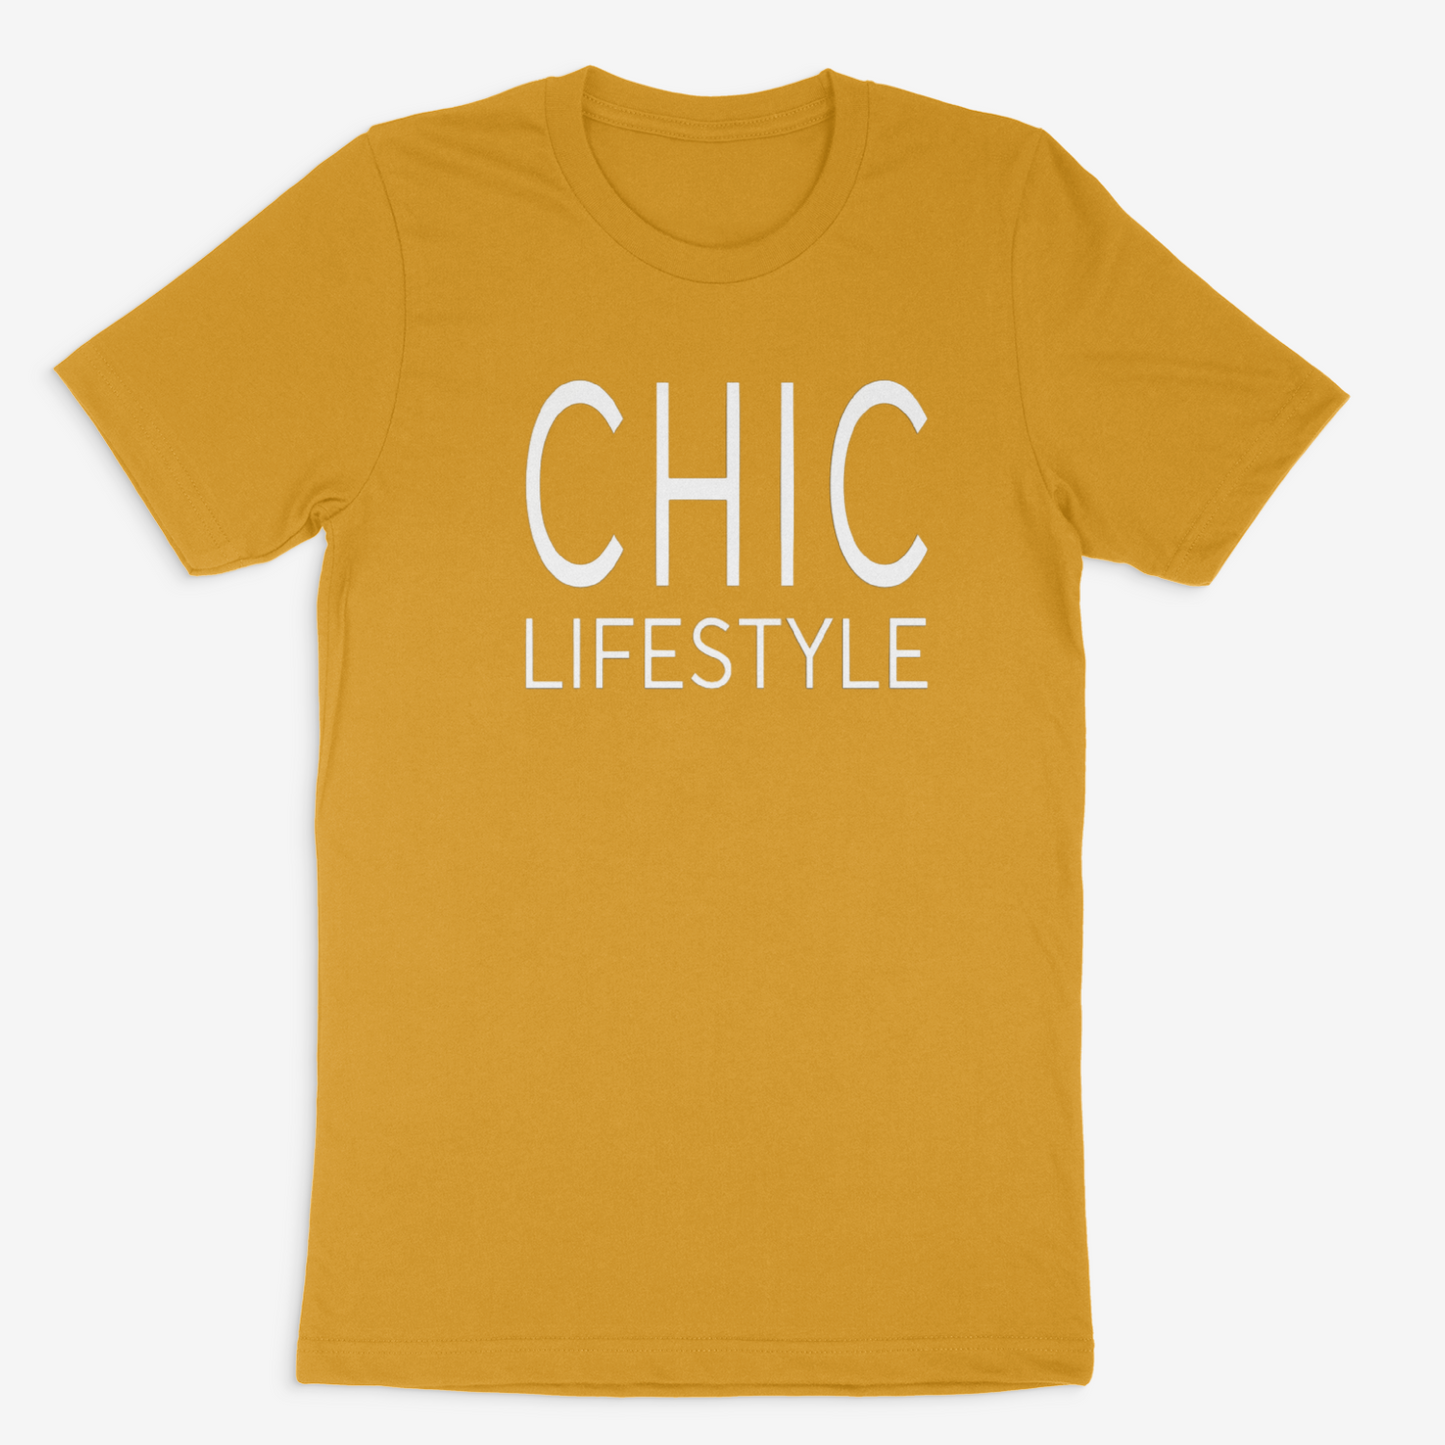 Chic Lifestyle Tee